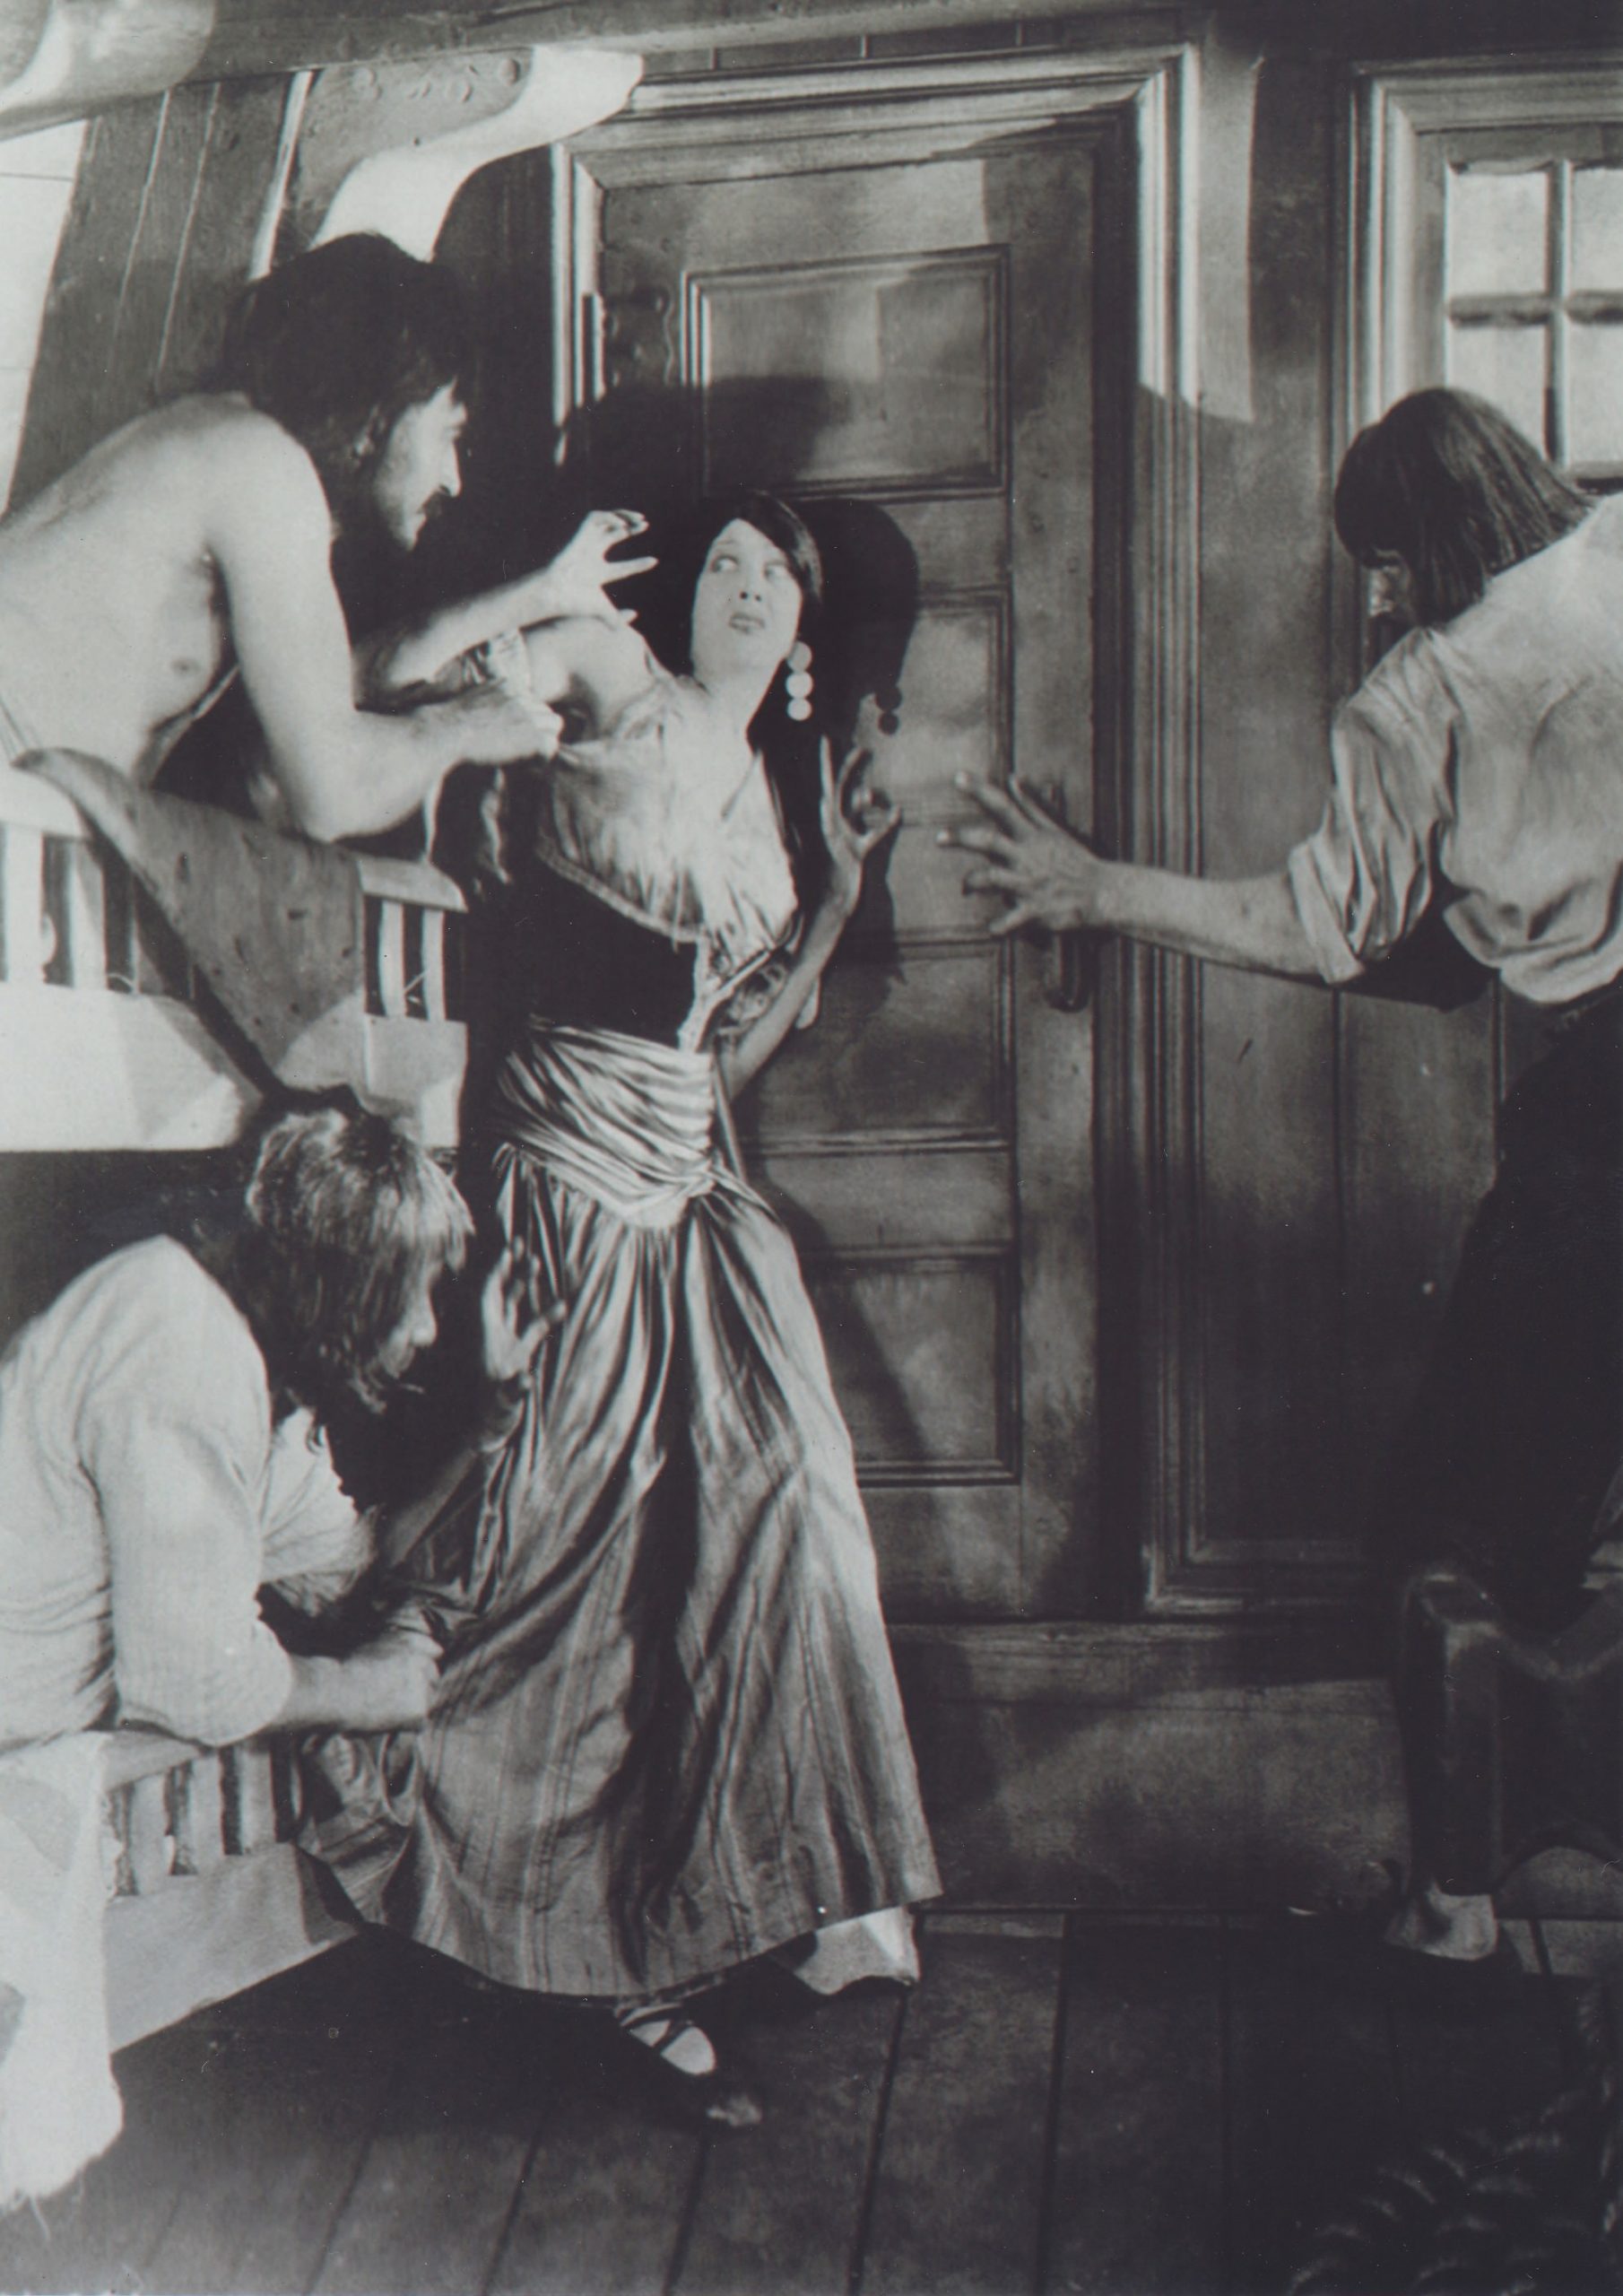 Barbara La Marr in "Strangers of the Night", 1923